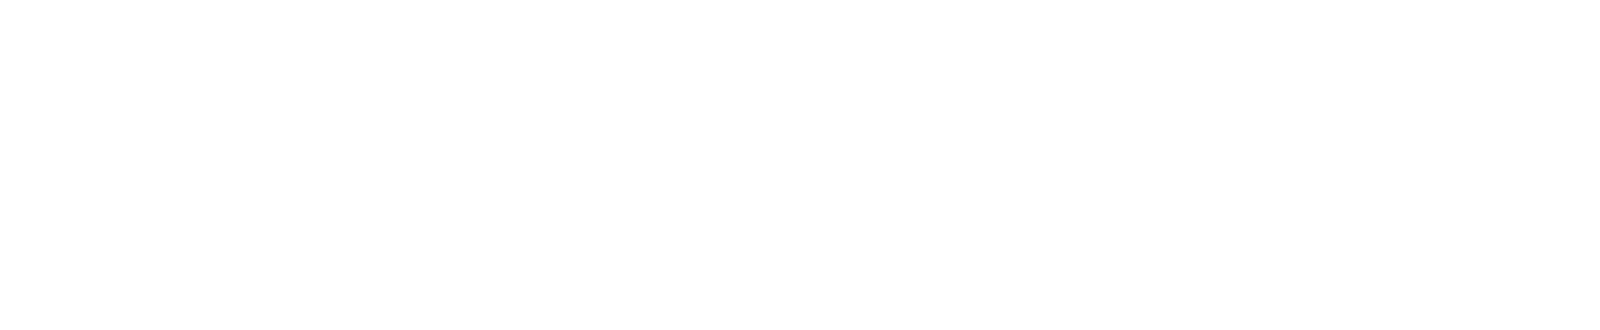 FuturePath_white